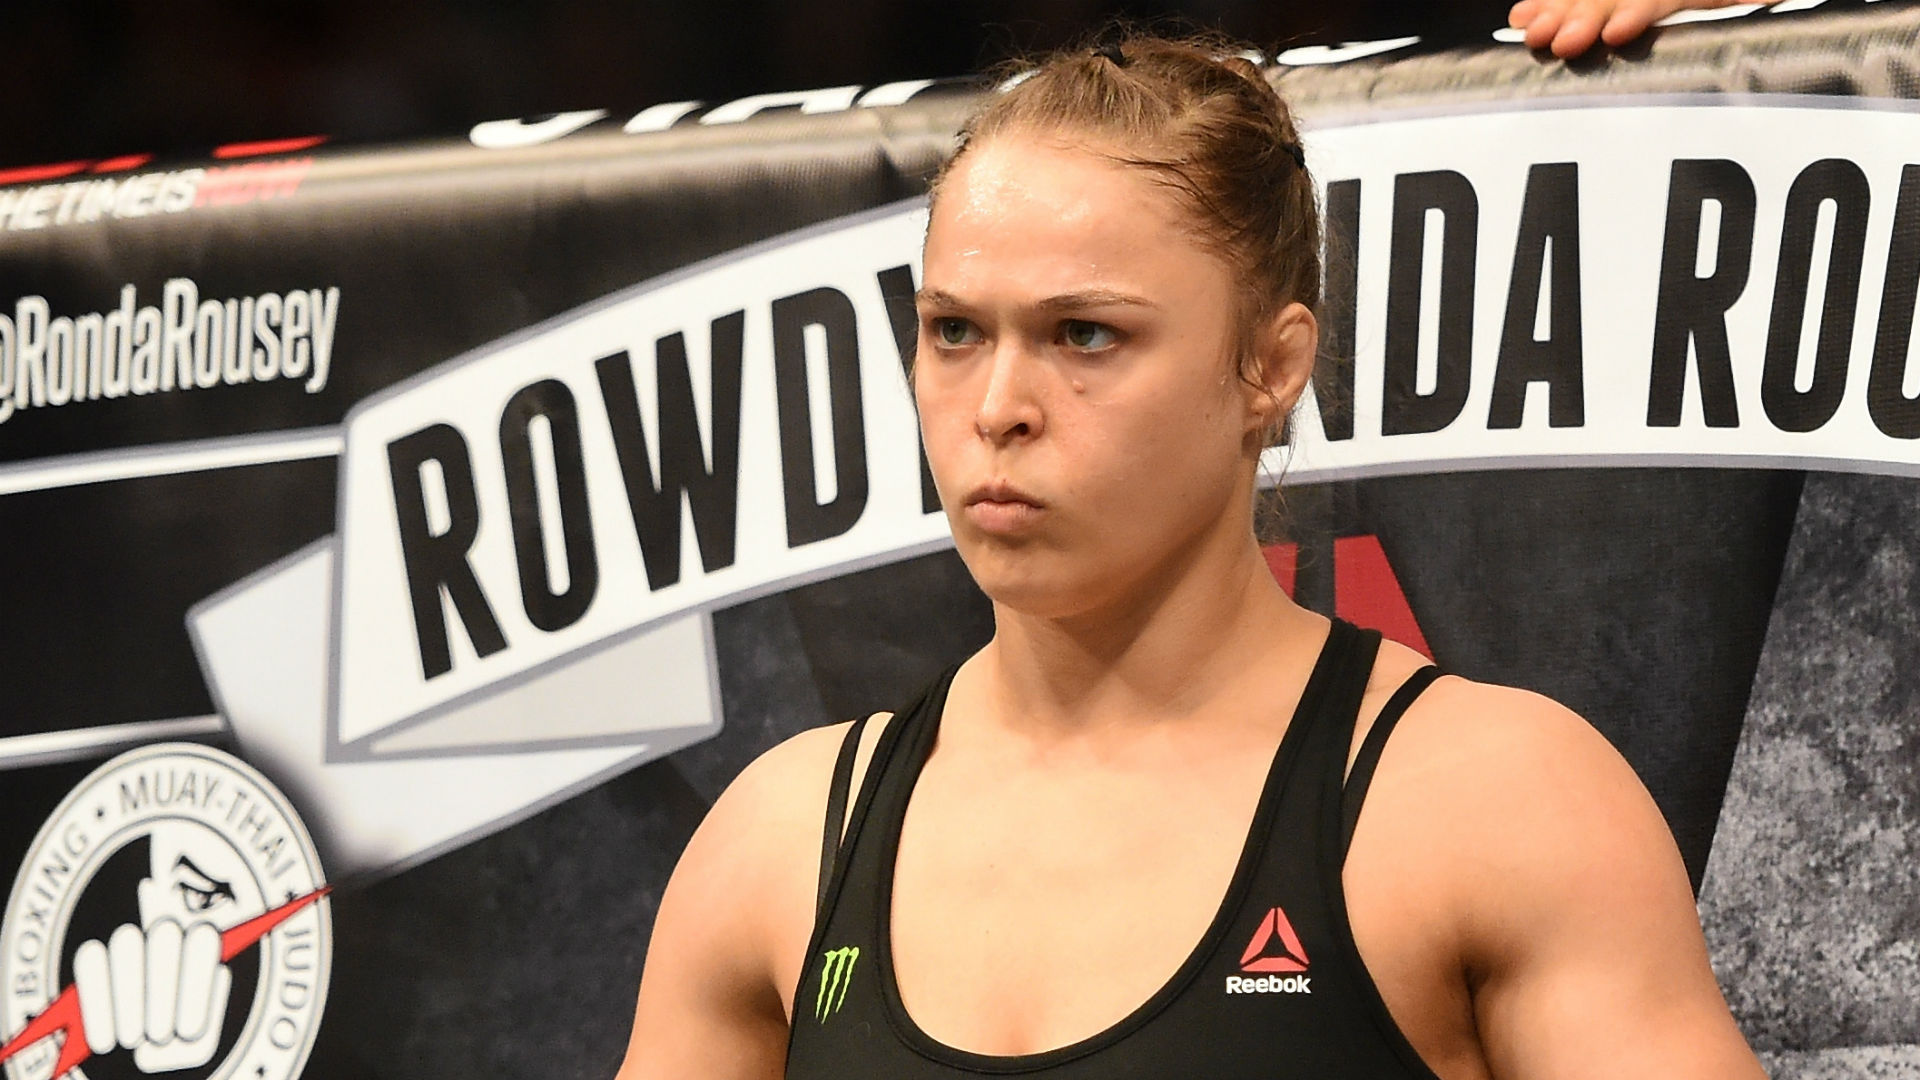 Ronda Rousey will return to face Amanda Nunes at UFC 207